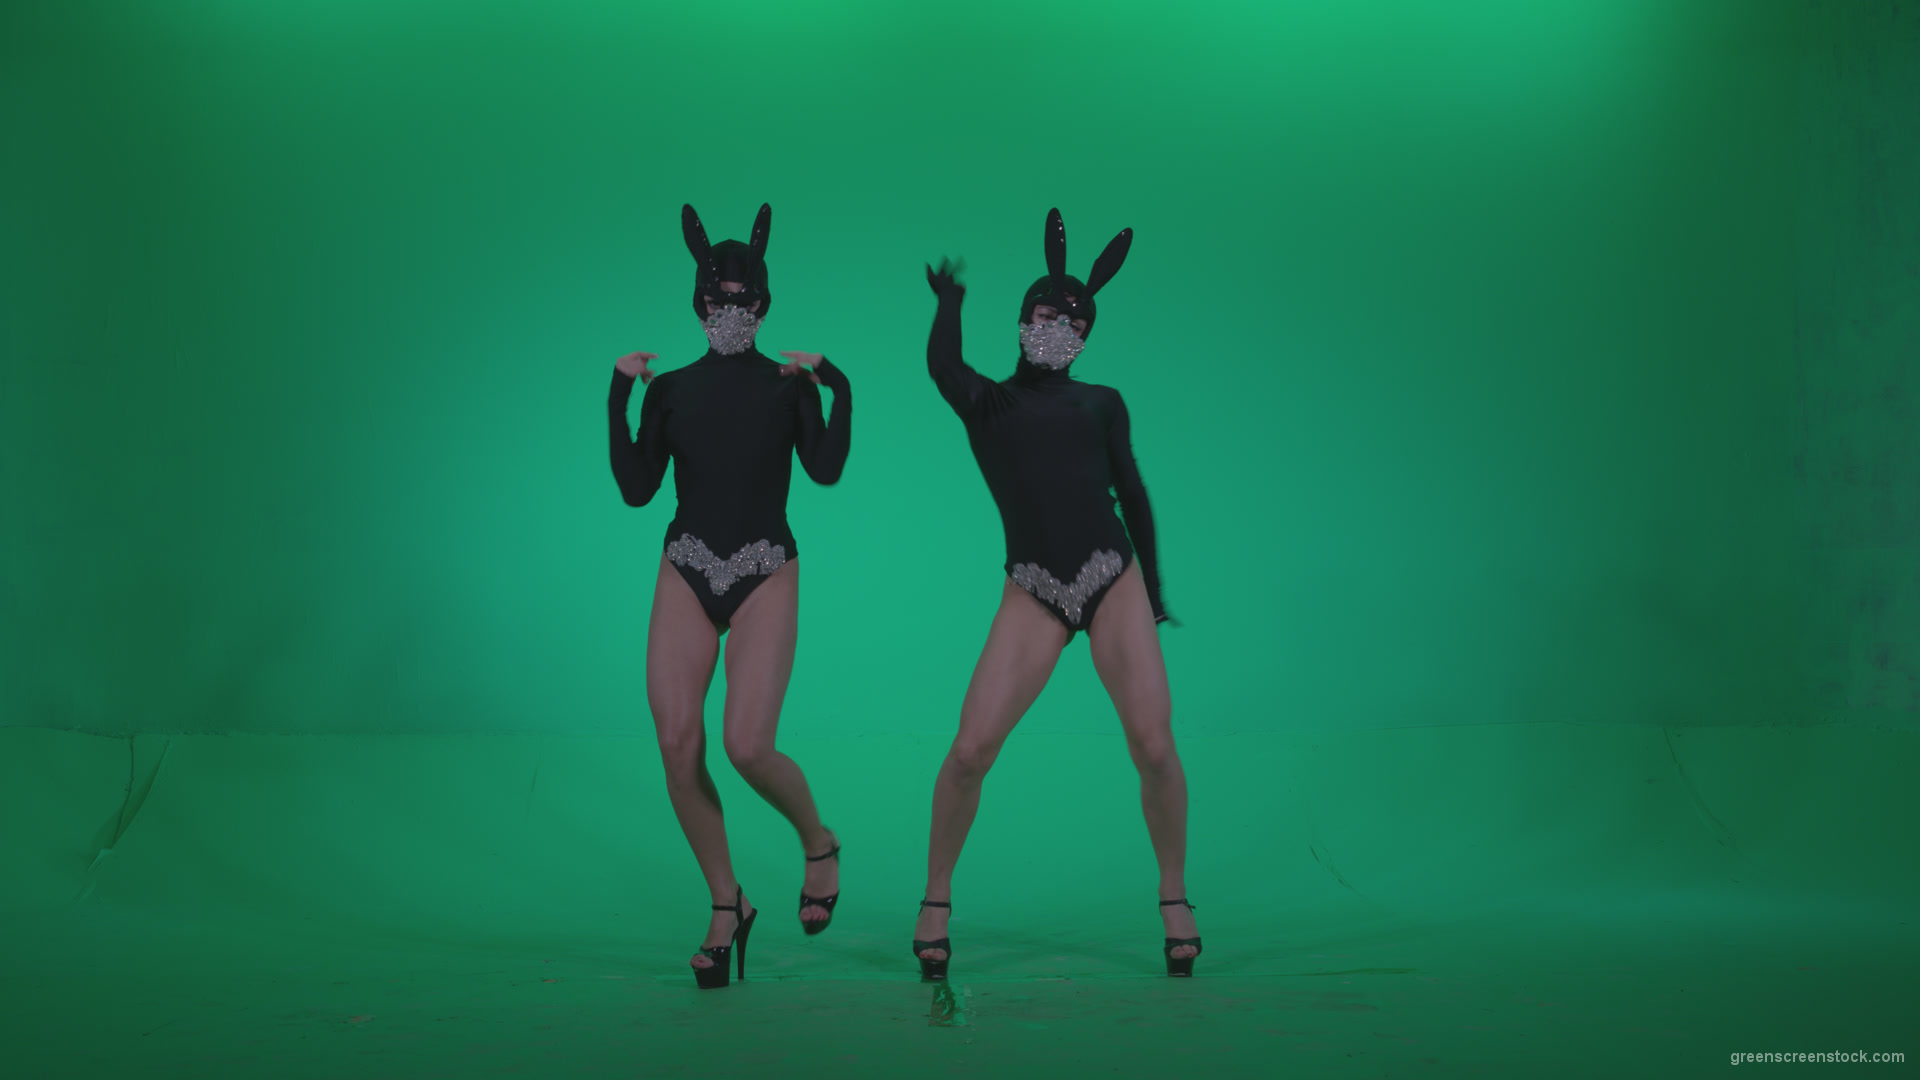 Go-go-Dancer-Black-Rabbit-u1-Green-Screen-Video-Footage_004 Green Screen Stock